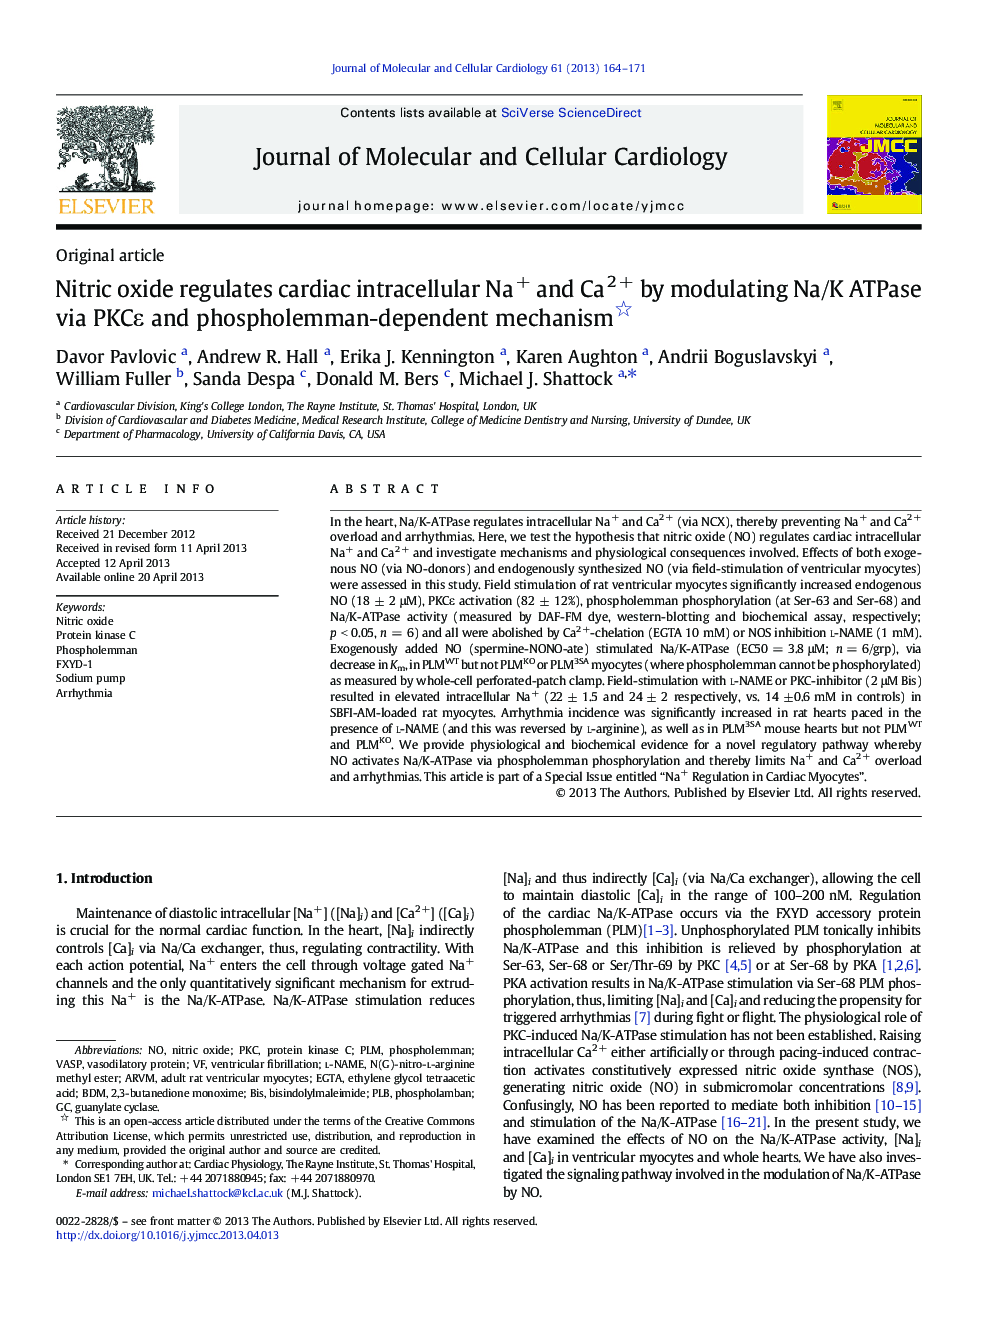 Nitric oxide regulates cardiac intracellular Na+ and Ca2Â + by modulating Na/K ATPase via PKCÎµ and phospholemman-dependent mechanism